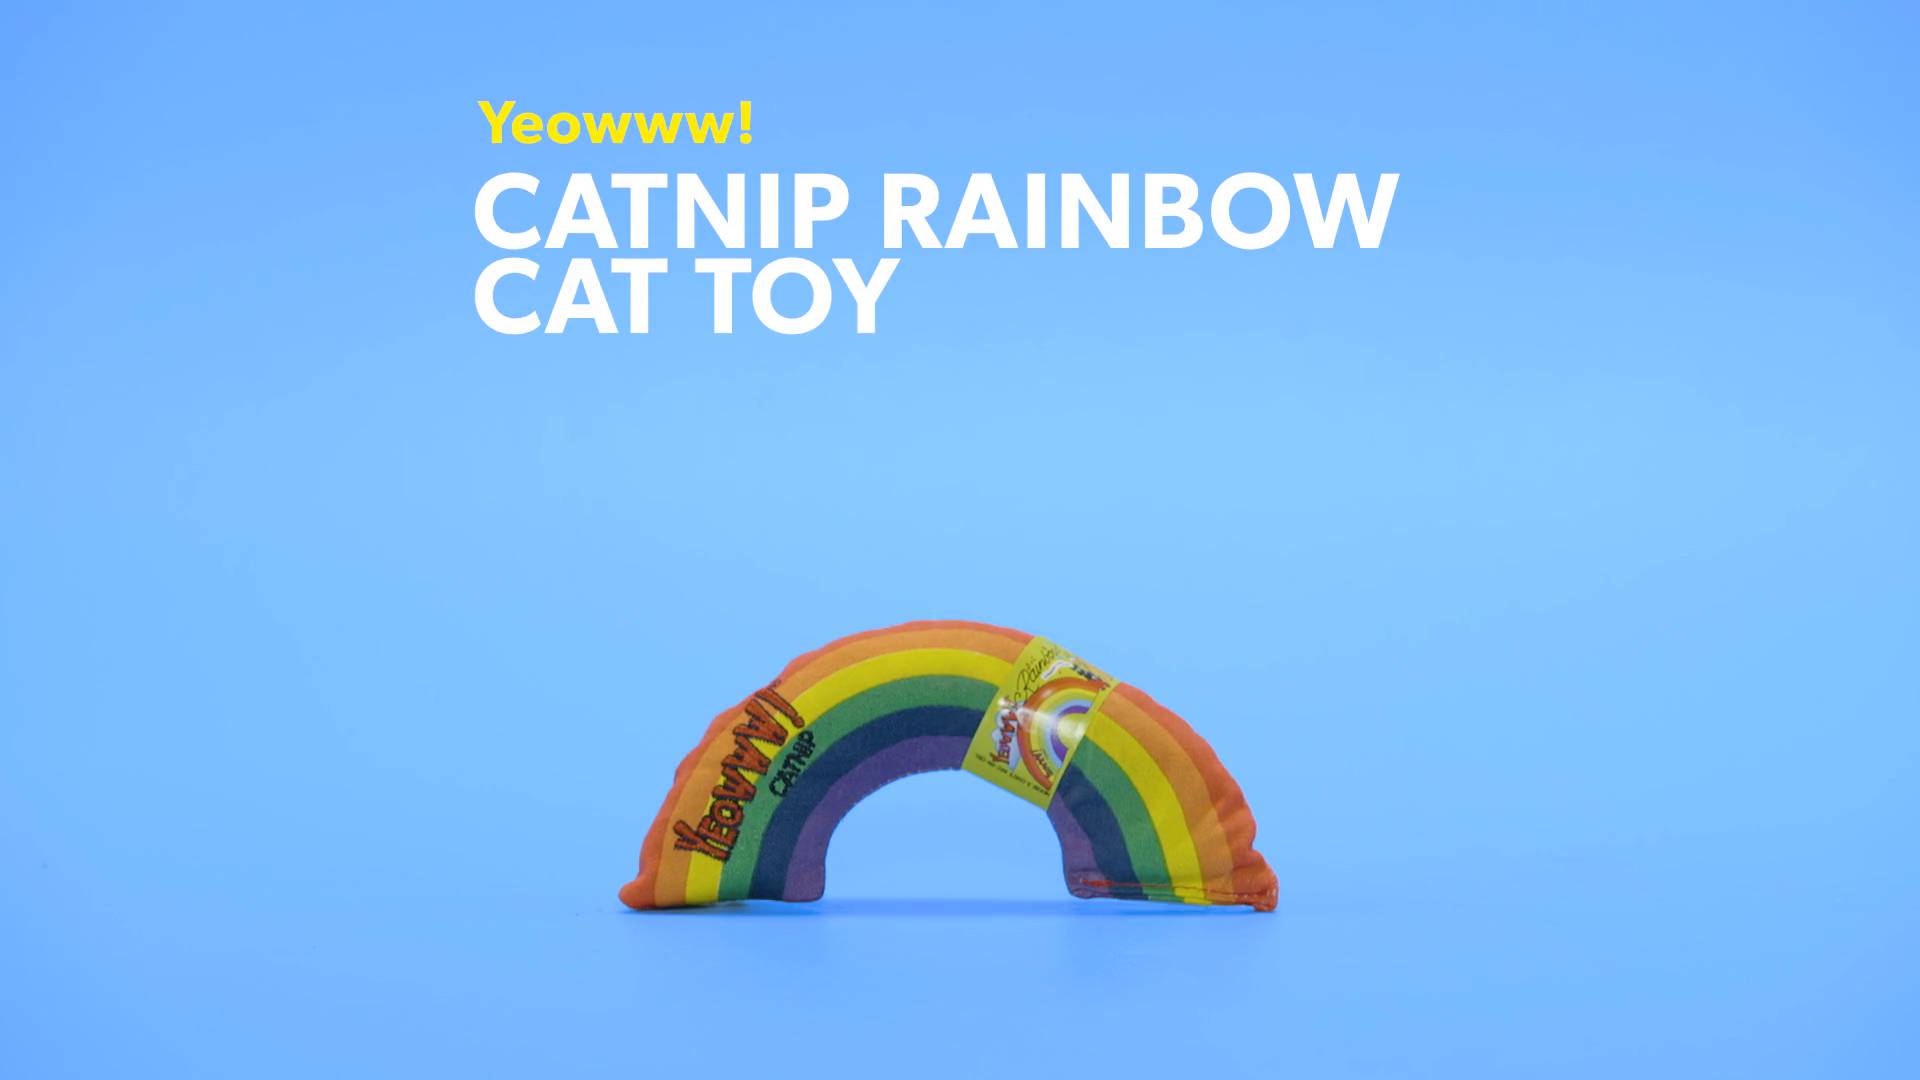 Pack of 1 Rainbow,6x1x5 Inch - 1 Catnip Toy 